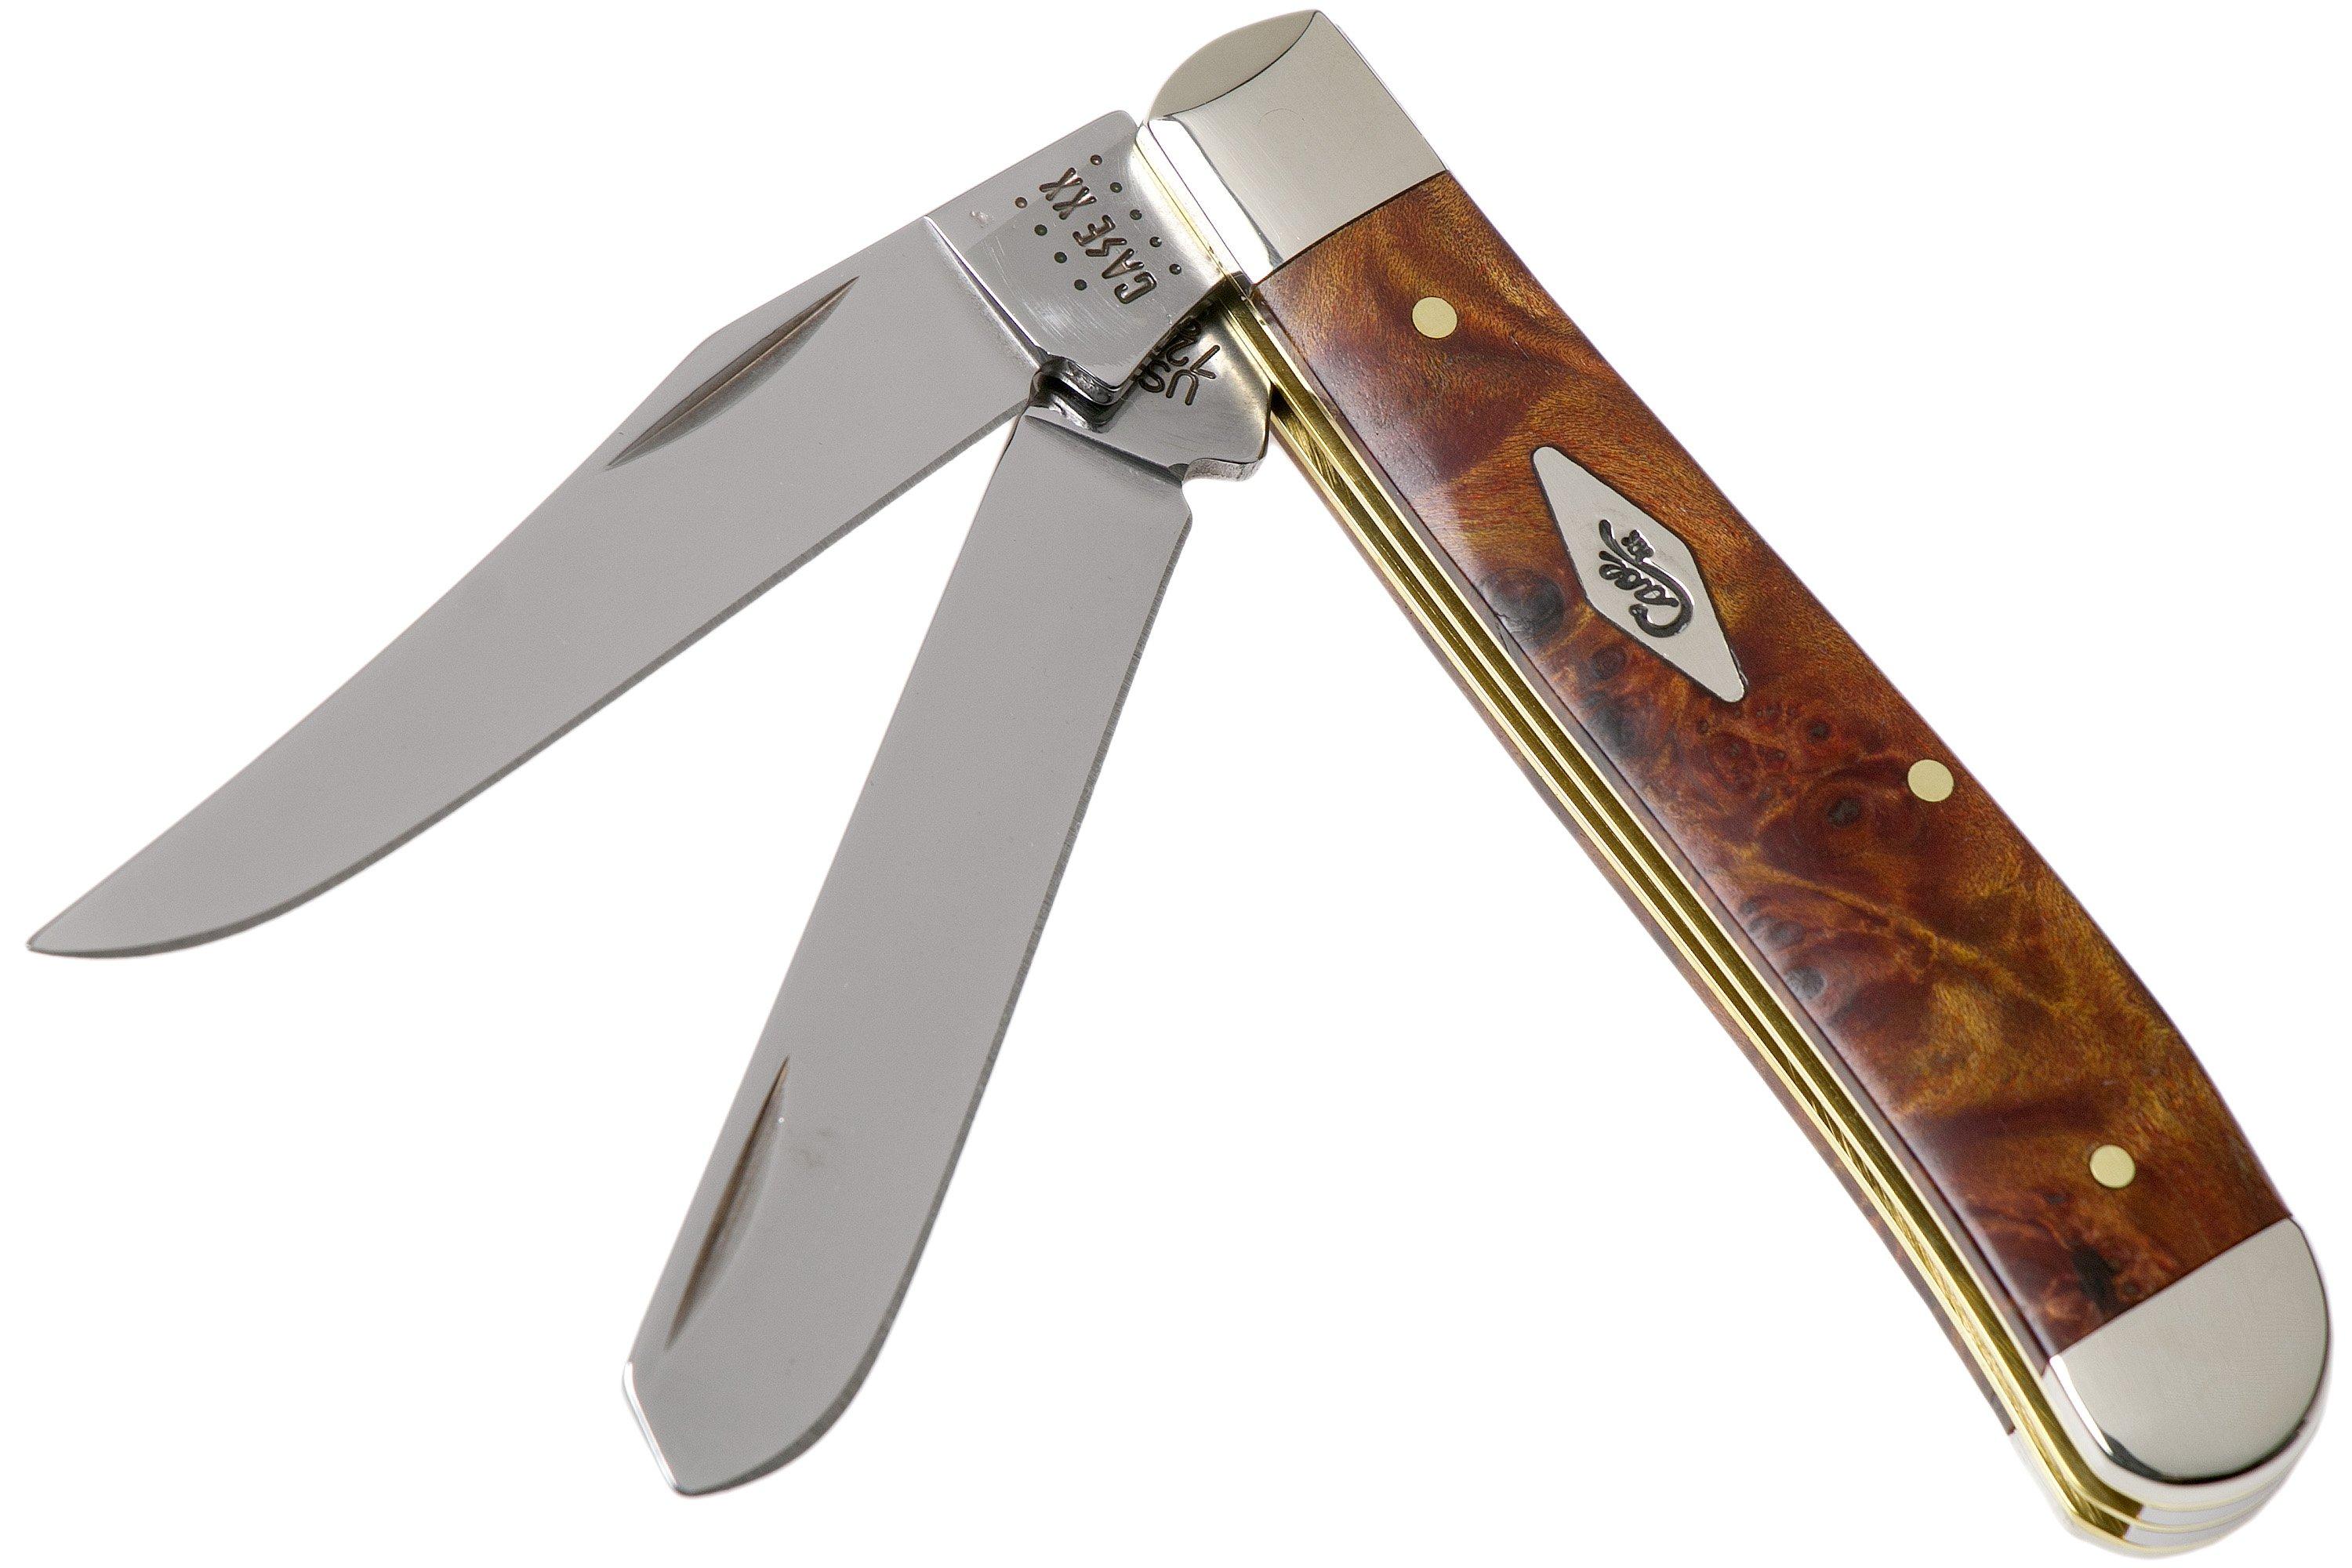 Case Mini Trapper Autumn Maple Burl Wood, 11545, 7207 SS pocket knife